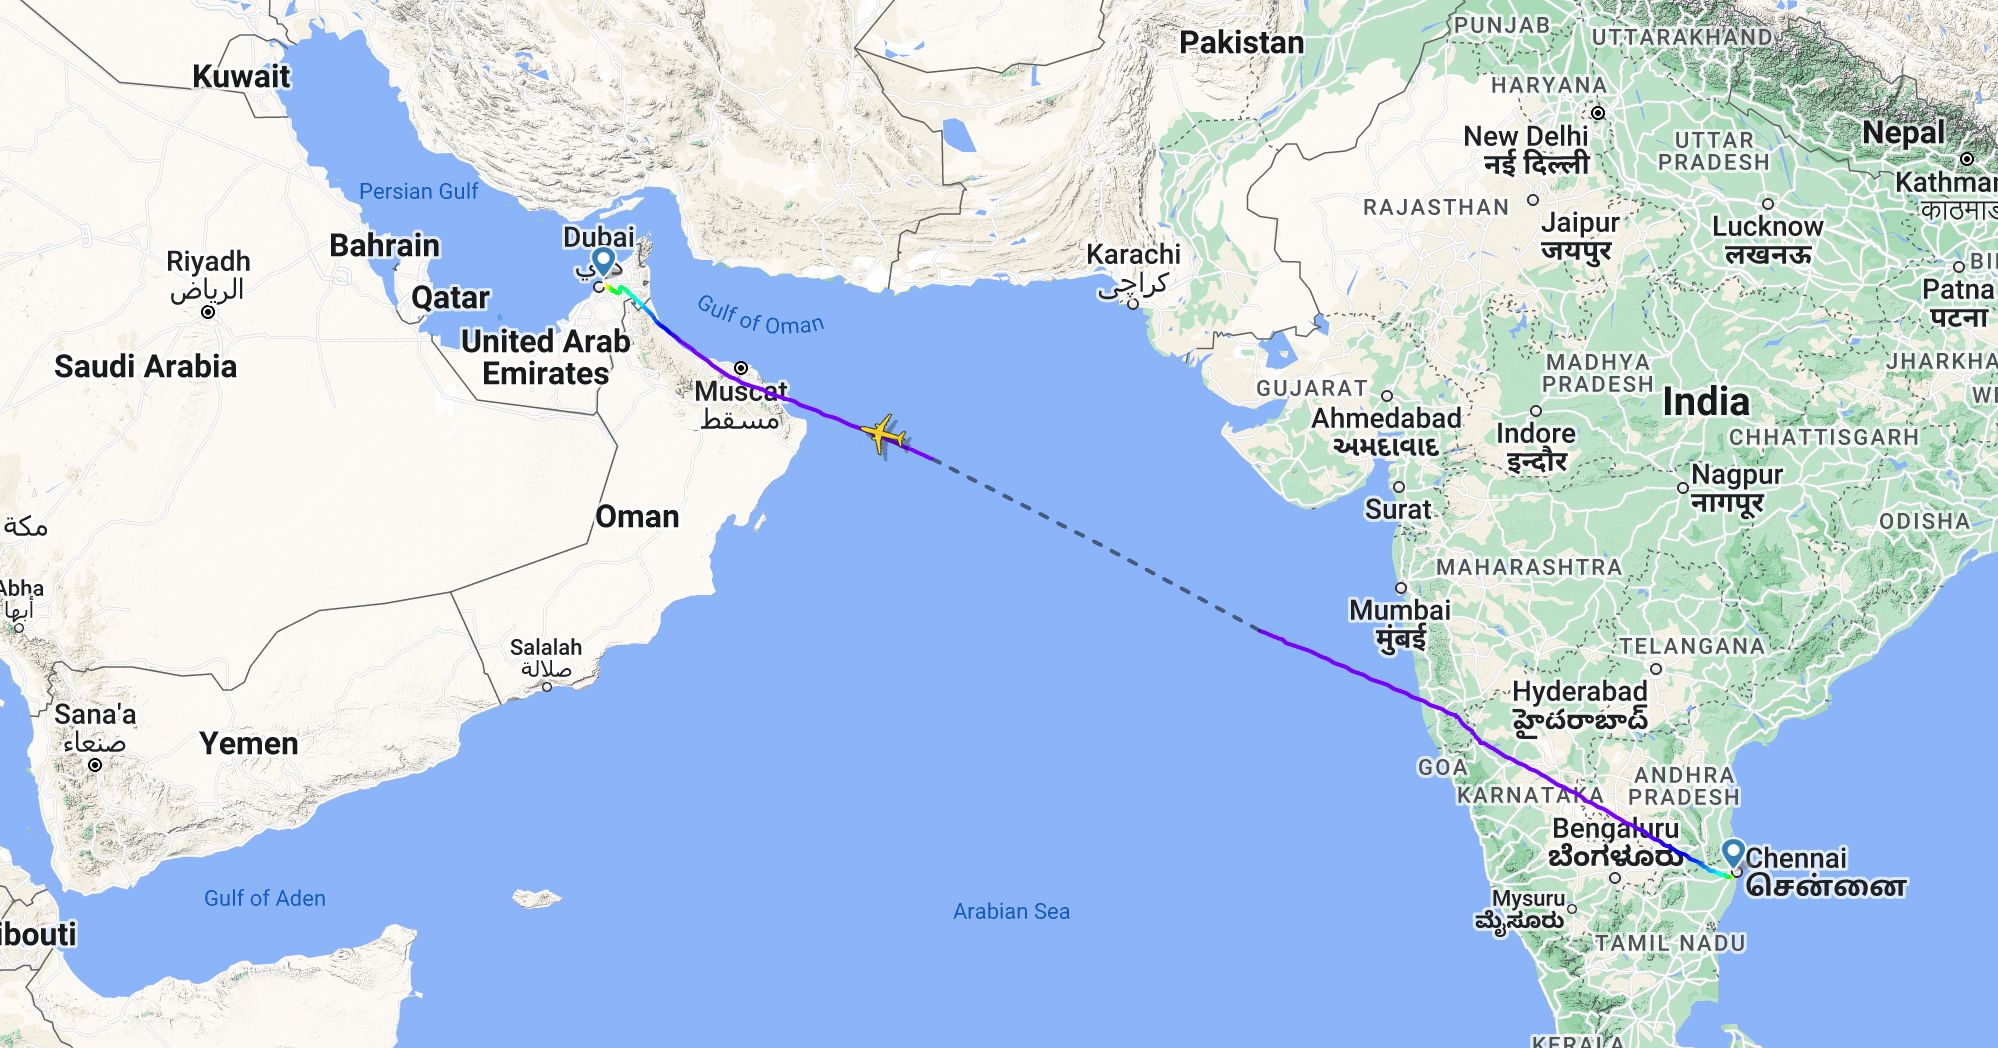 IndiGo 6E65 flight from Chennai to Dubai